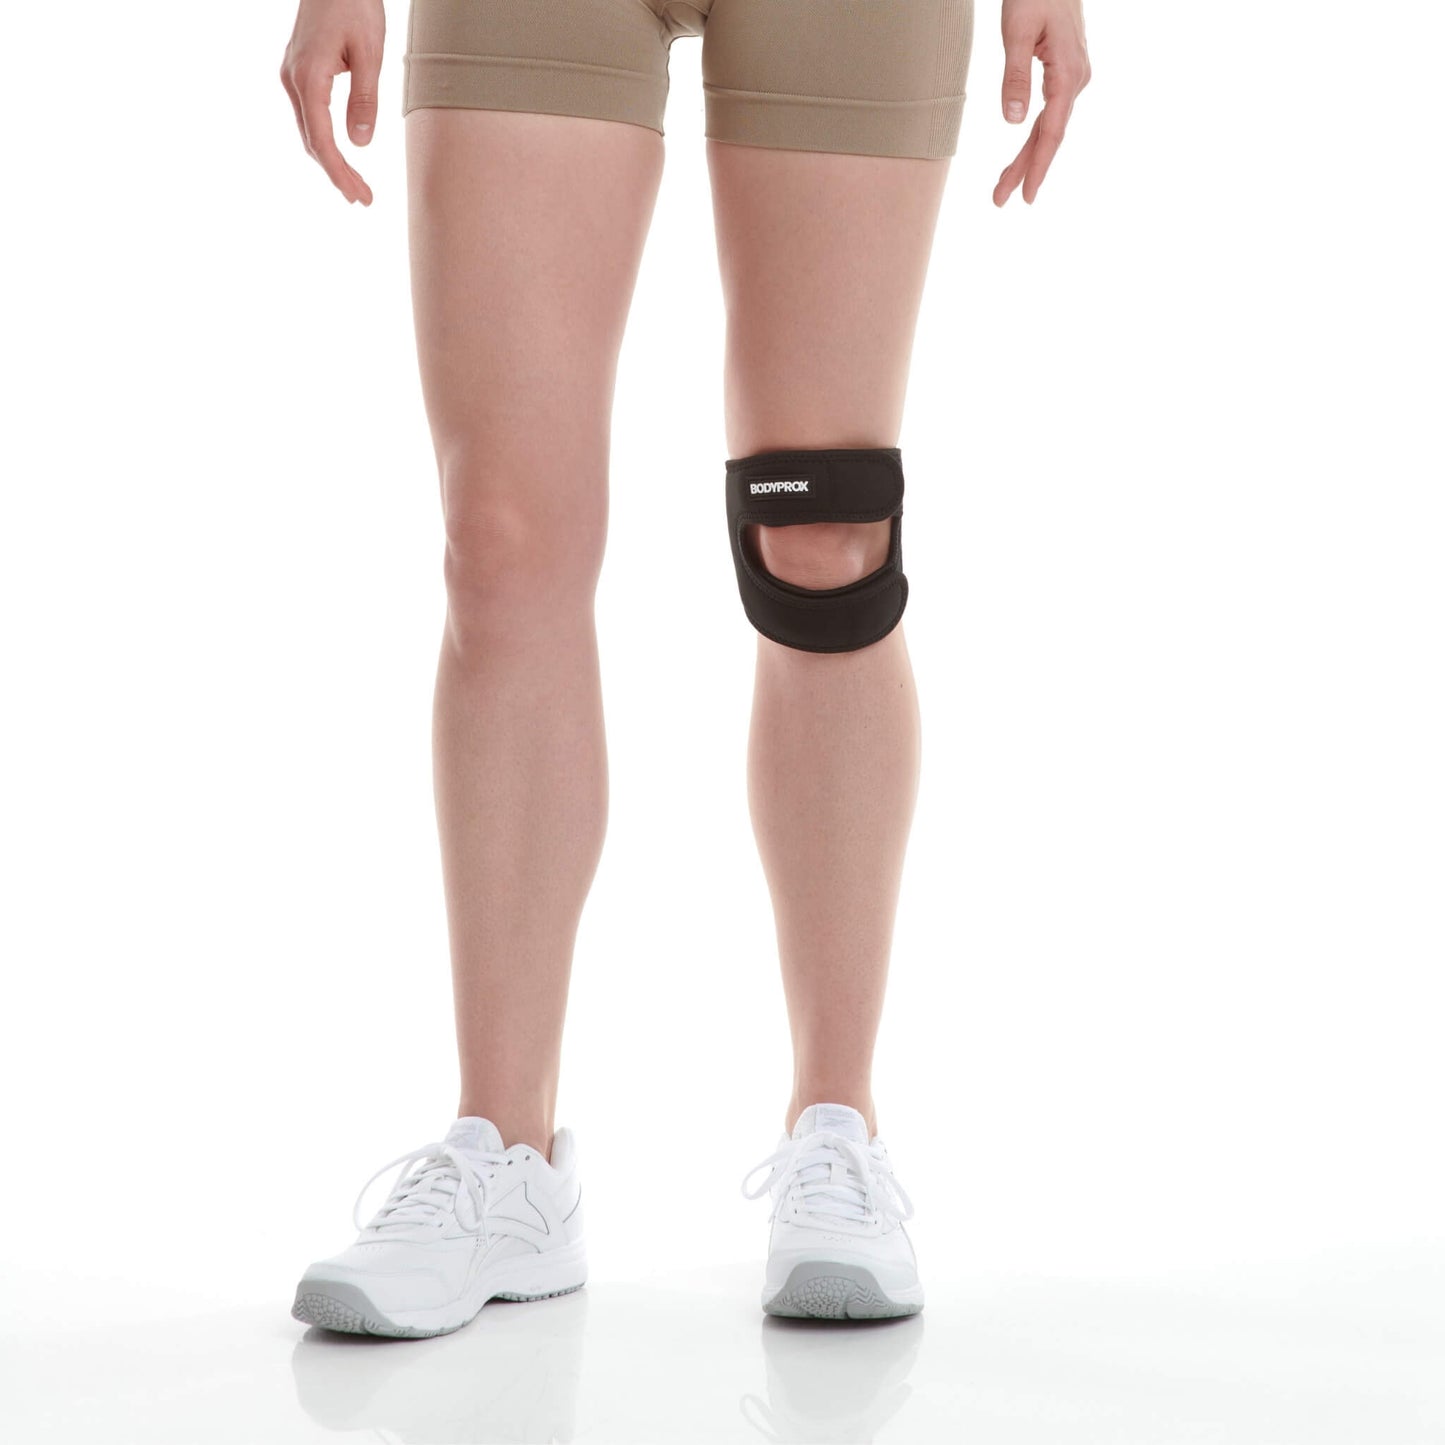 Bodyprox Patellar Tendon Support Strap (Small/Medium), Knee Pain Relief  Adjustable Neoprene Knee Strap for Running, Arthritis, Jumper, Tennis  Injury